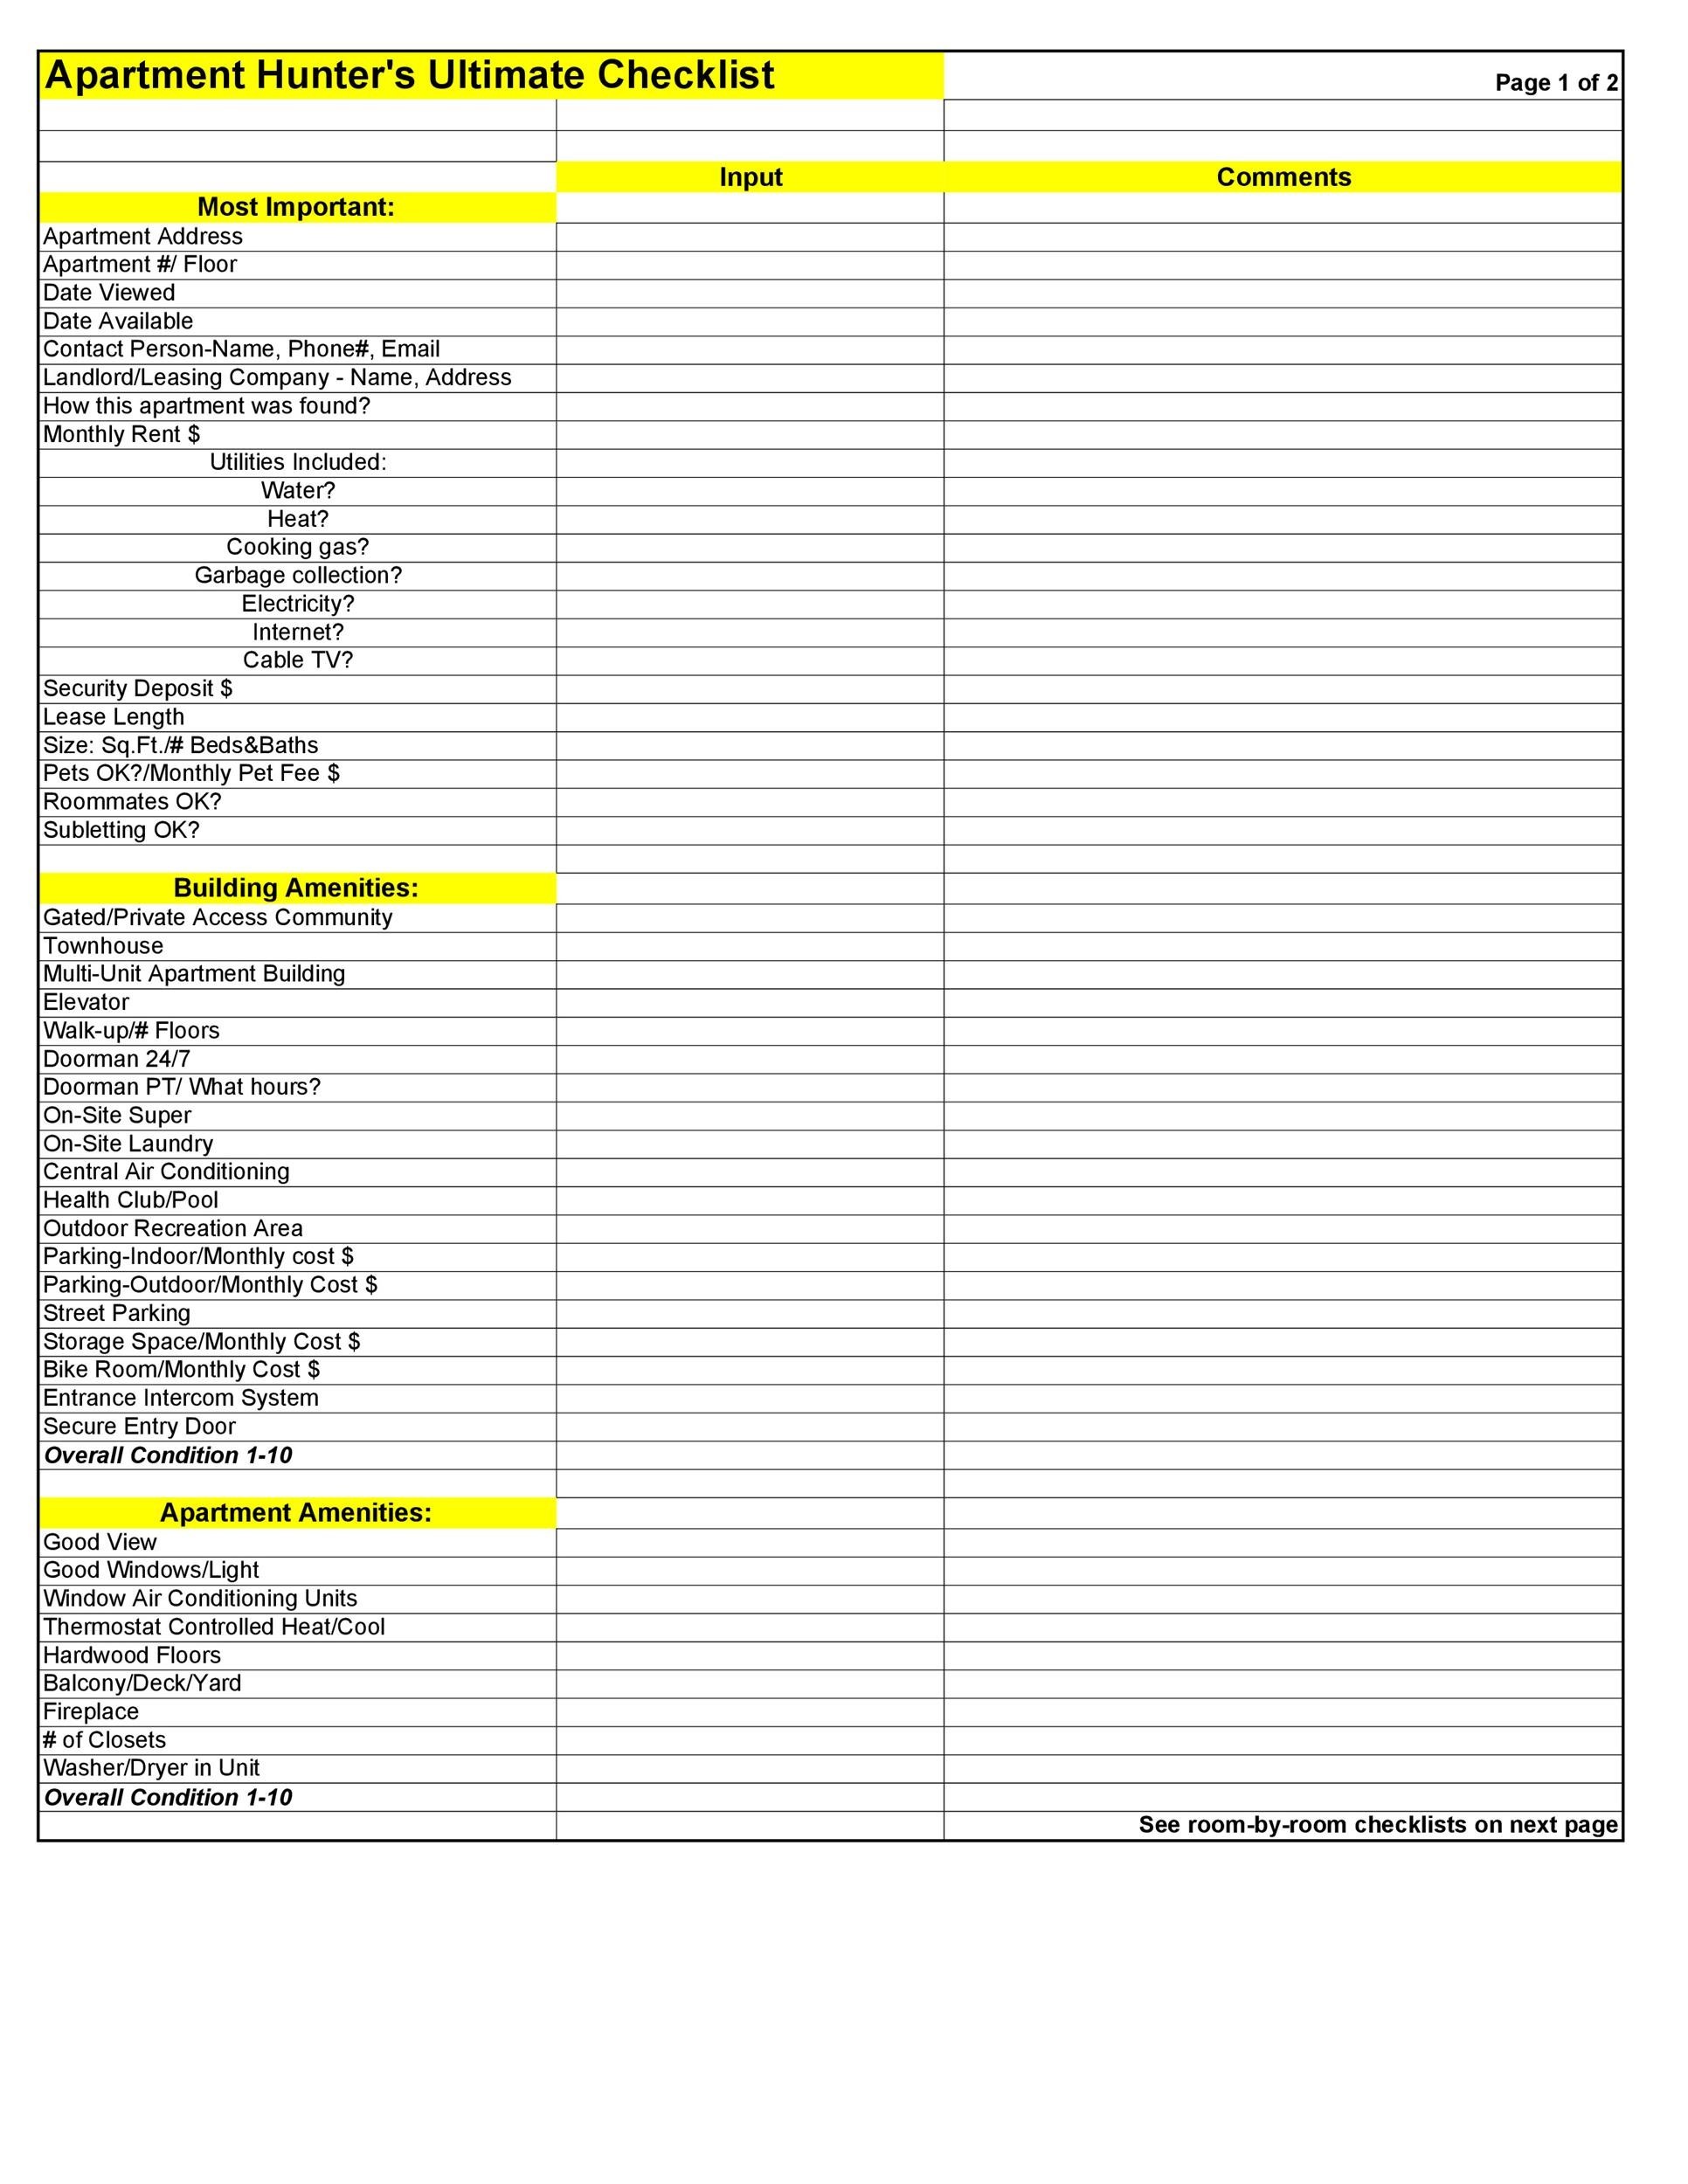 http://templatelab.com/wp-content/uploads/2017/08/apartment-checklist-21.jpg?w=320